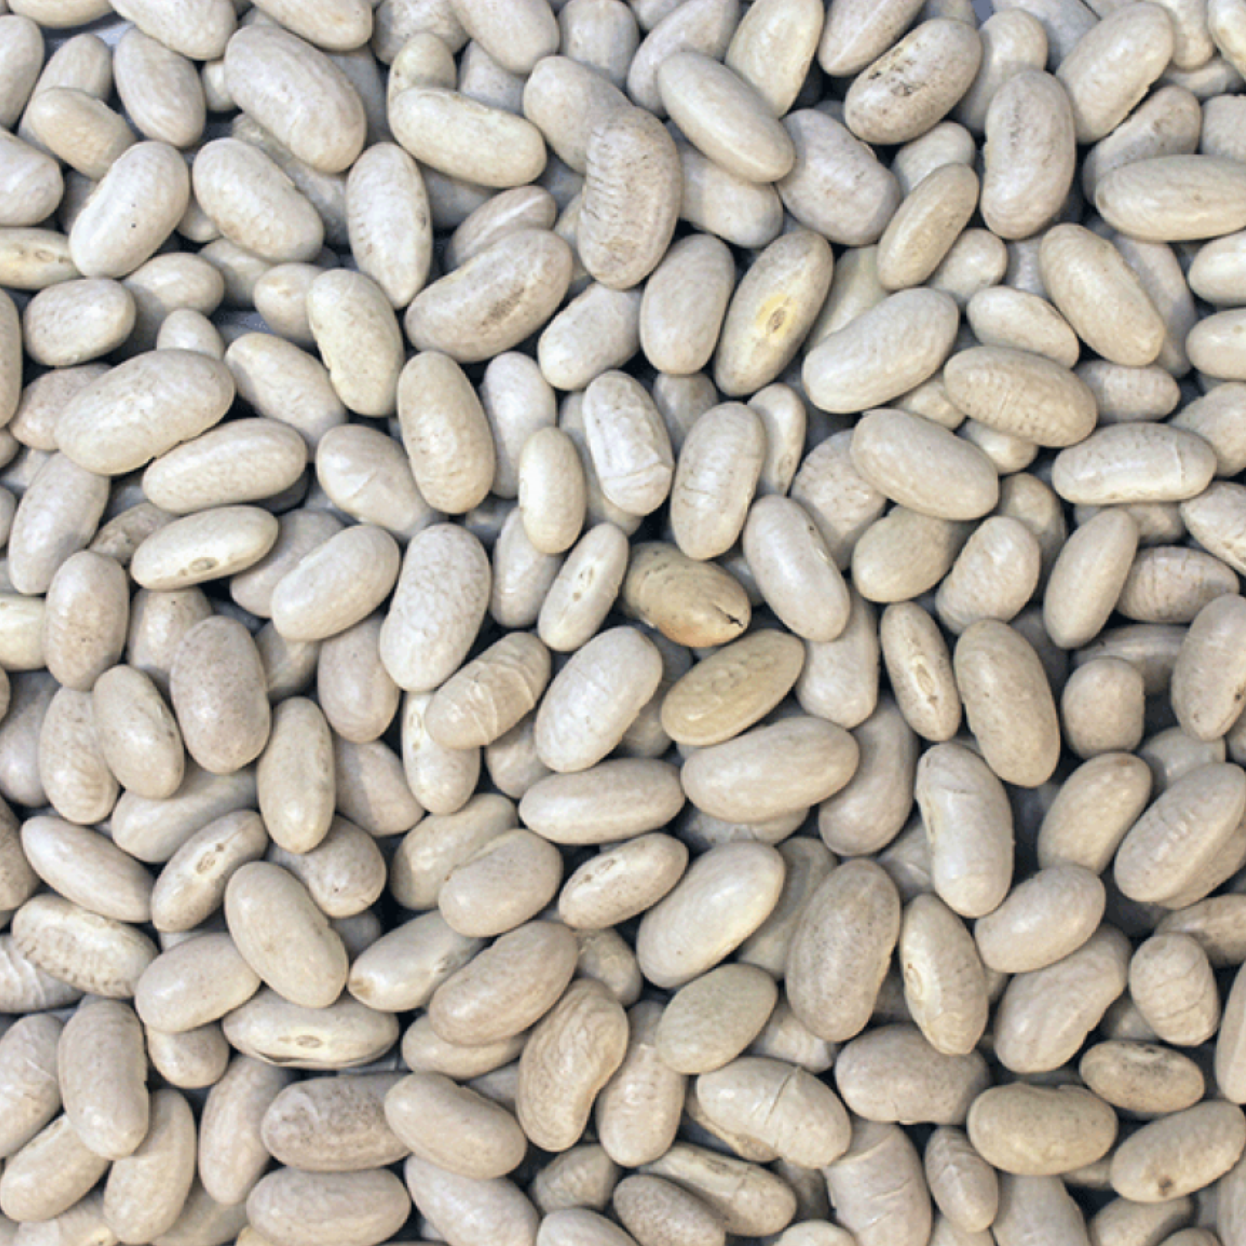 Cannellini Beans | Organic